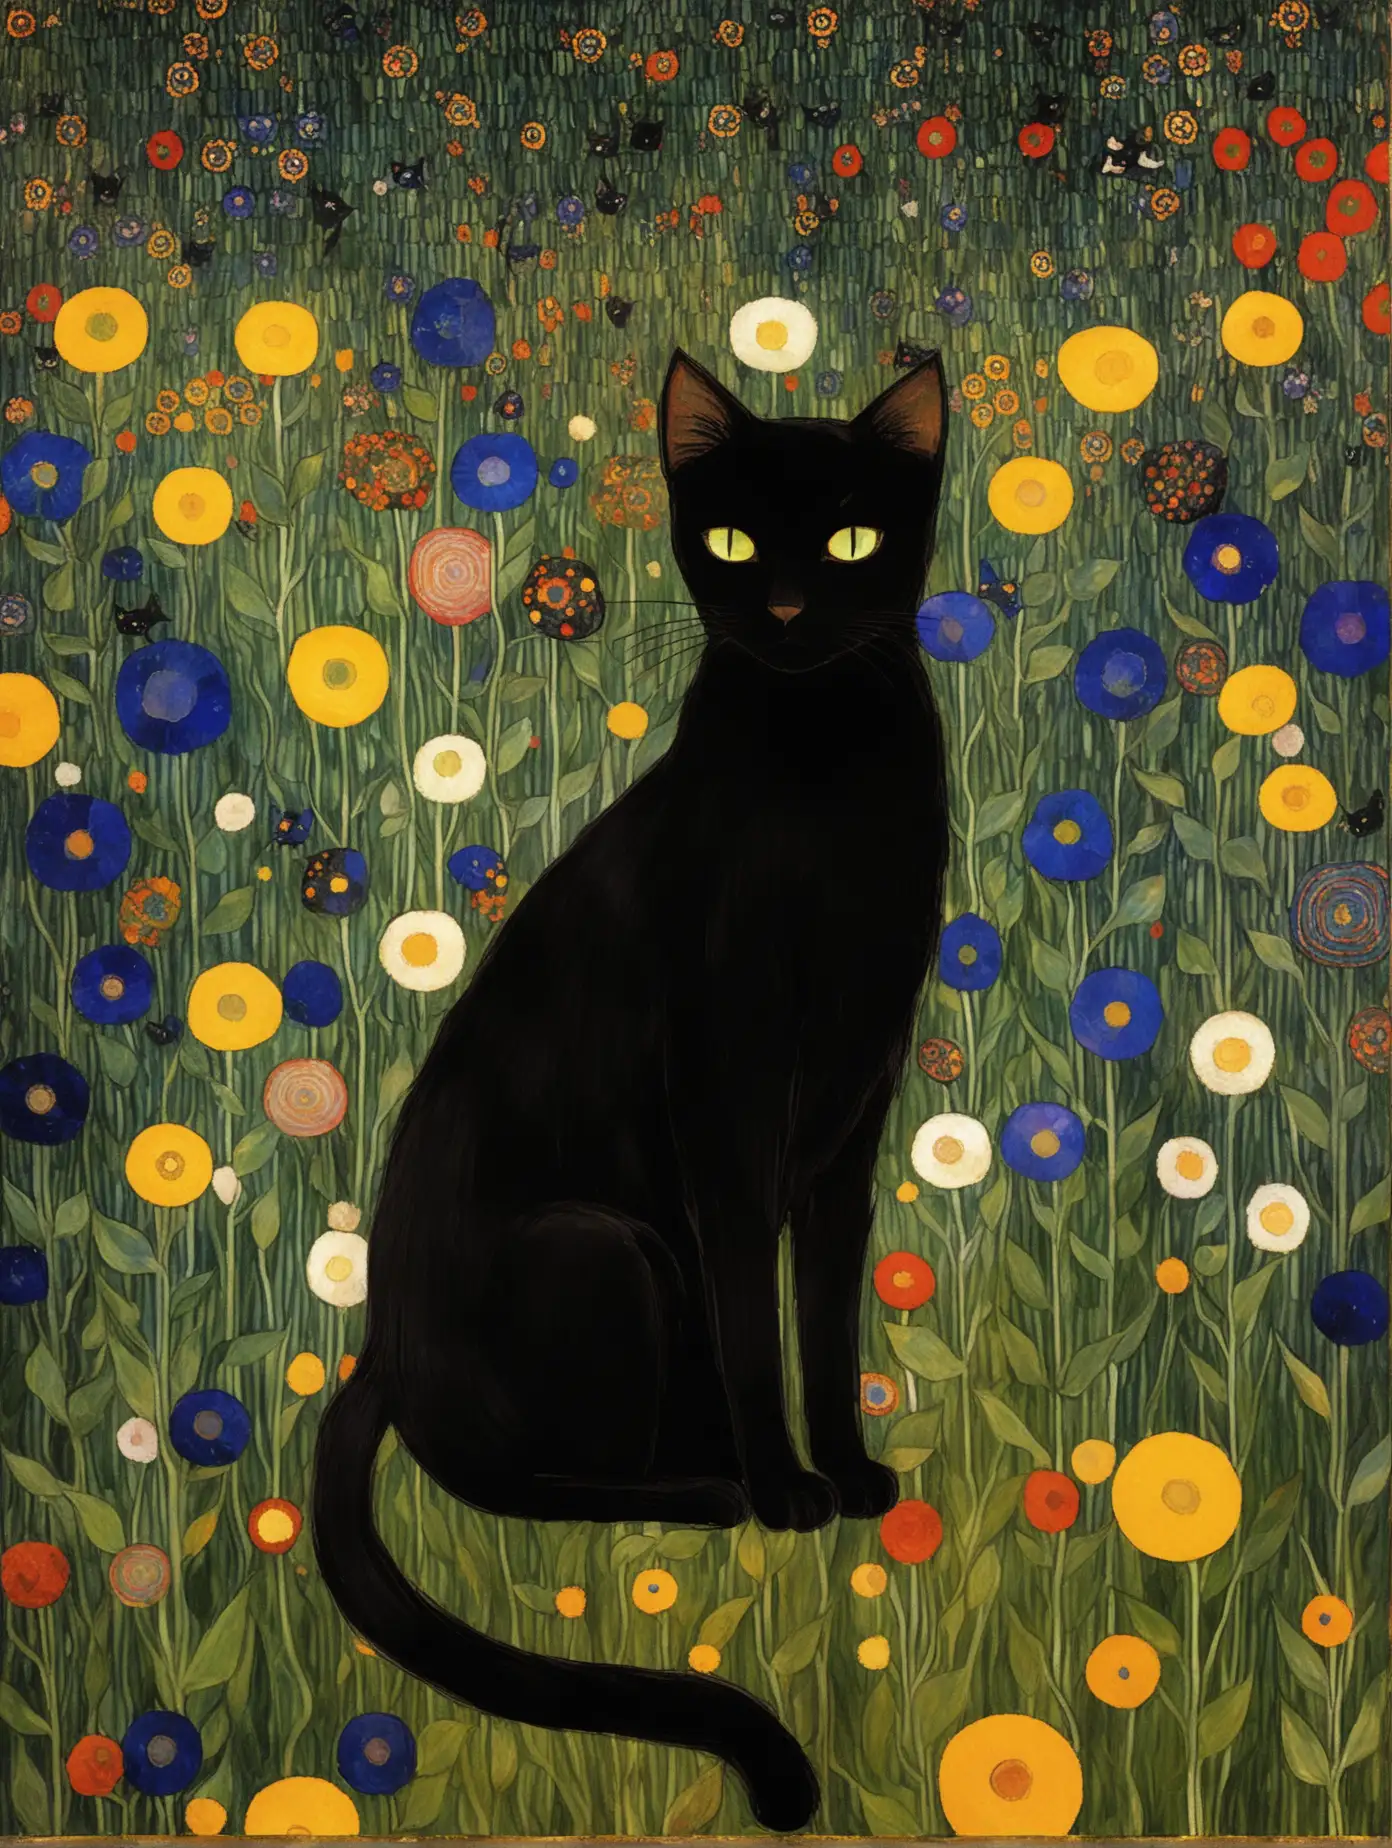 Klimt Inspired Garden with Black Cat Artwork